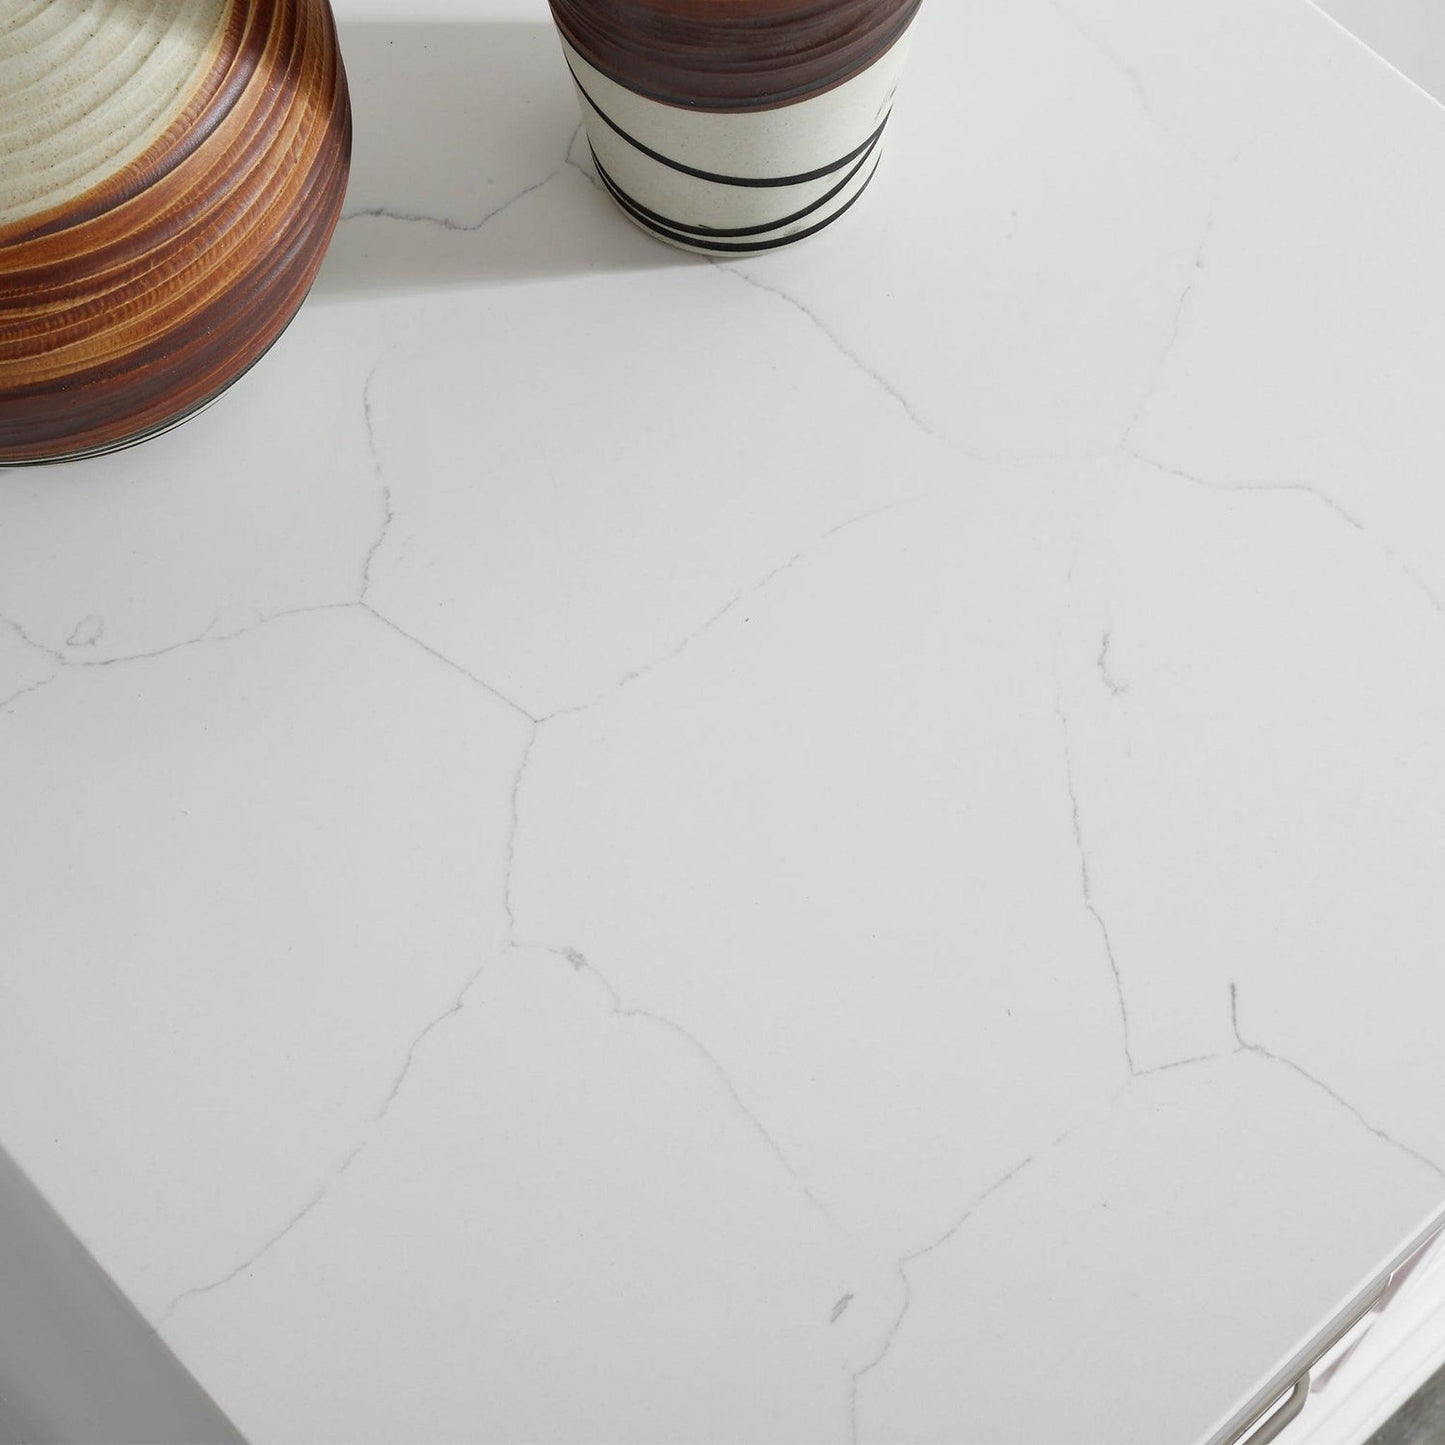 Vinnova Charlotte 60" White Freestanding Double Vanity Set In White Carrara Composite Quartz Stone Top With Undermount Ceramic Sink